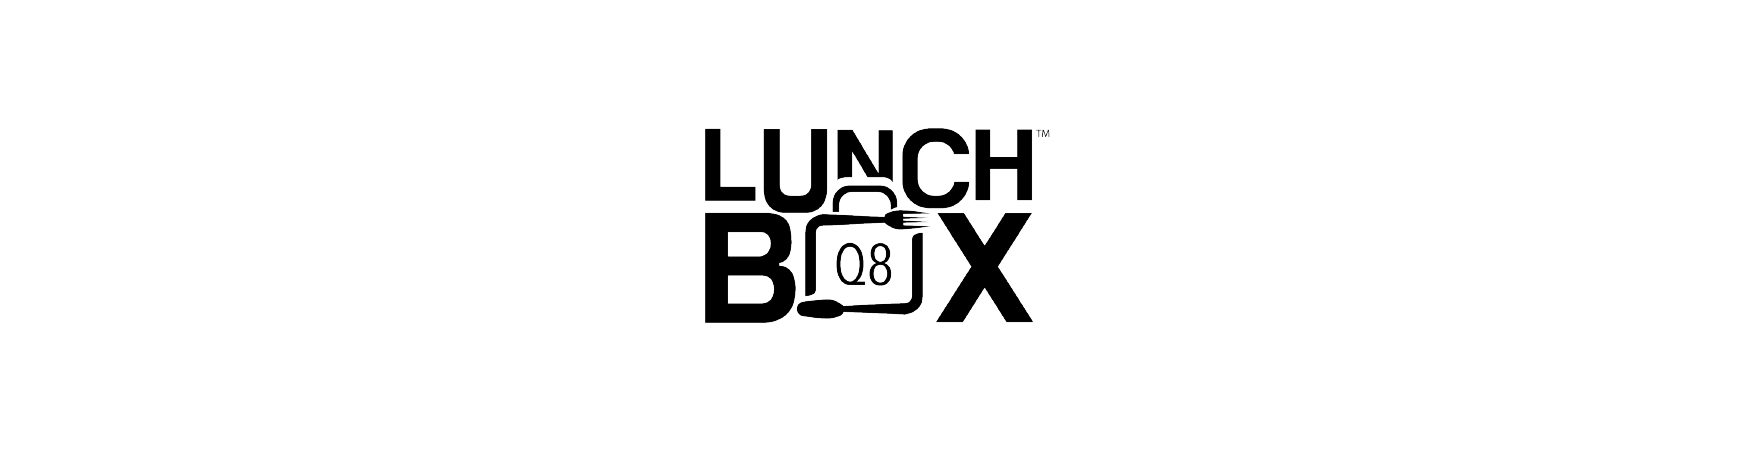 Lunchboxq8